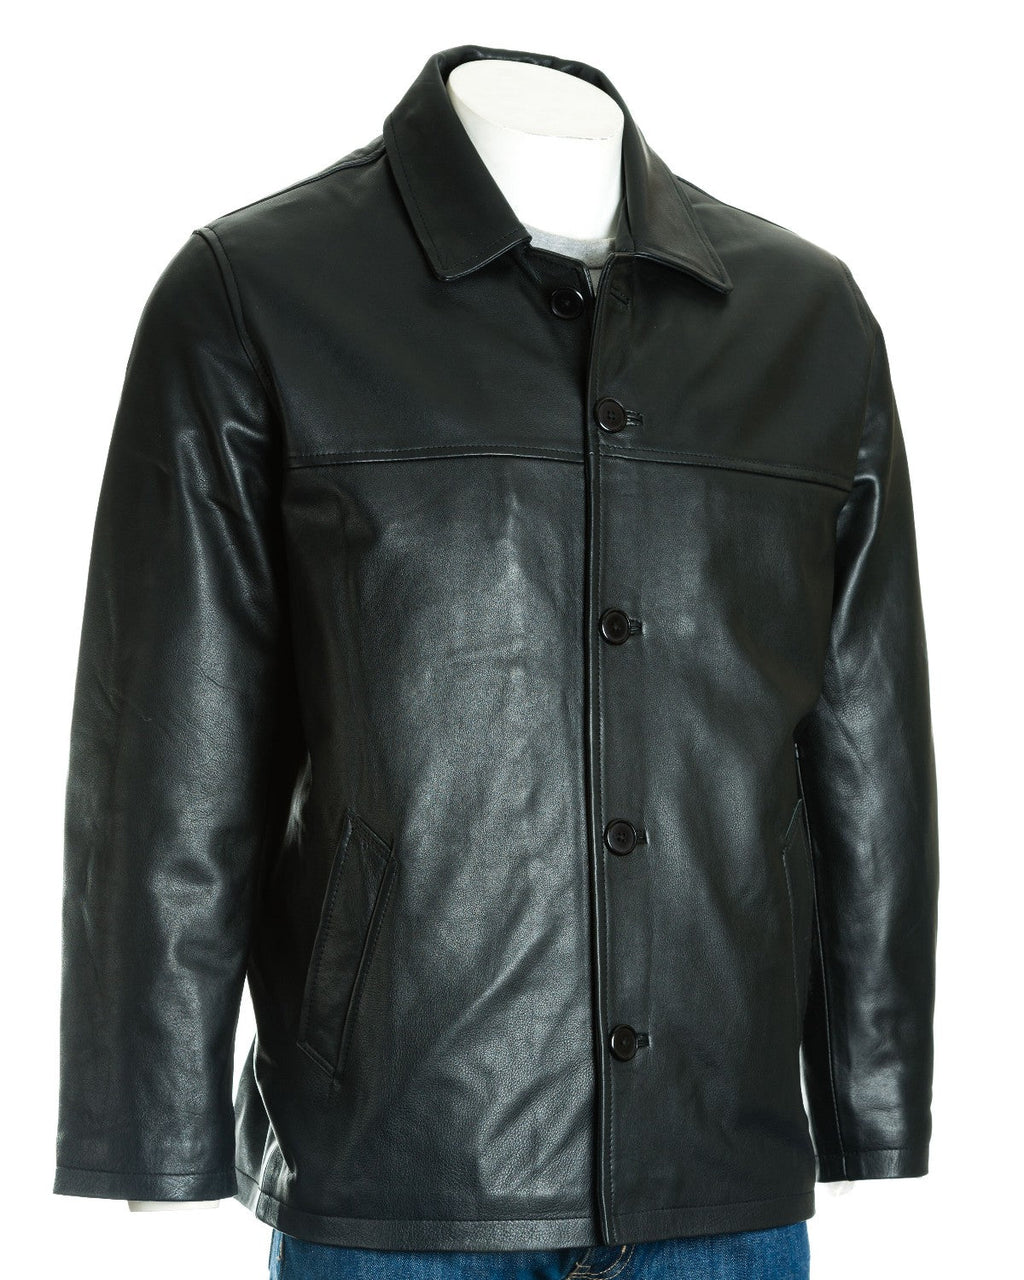 Men's Black Plus Size Classic Box Style Leather Jacket: Franco